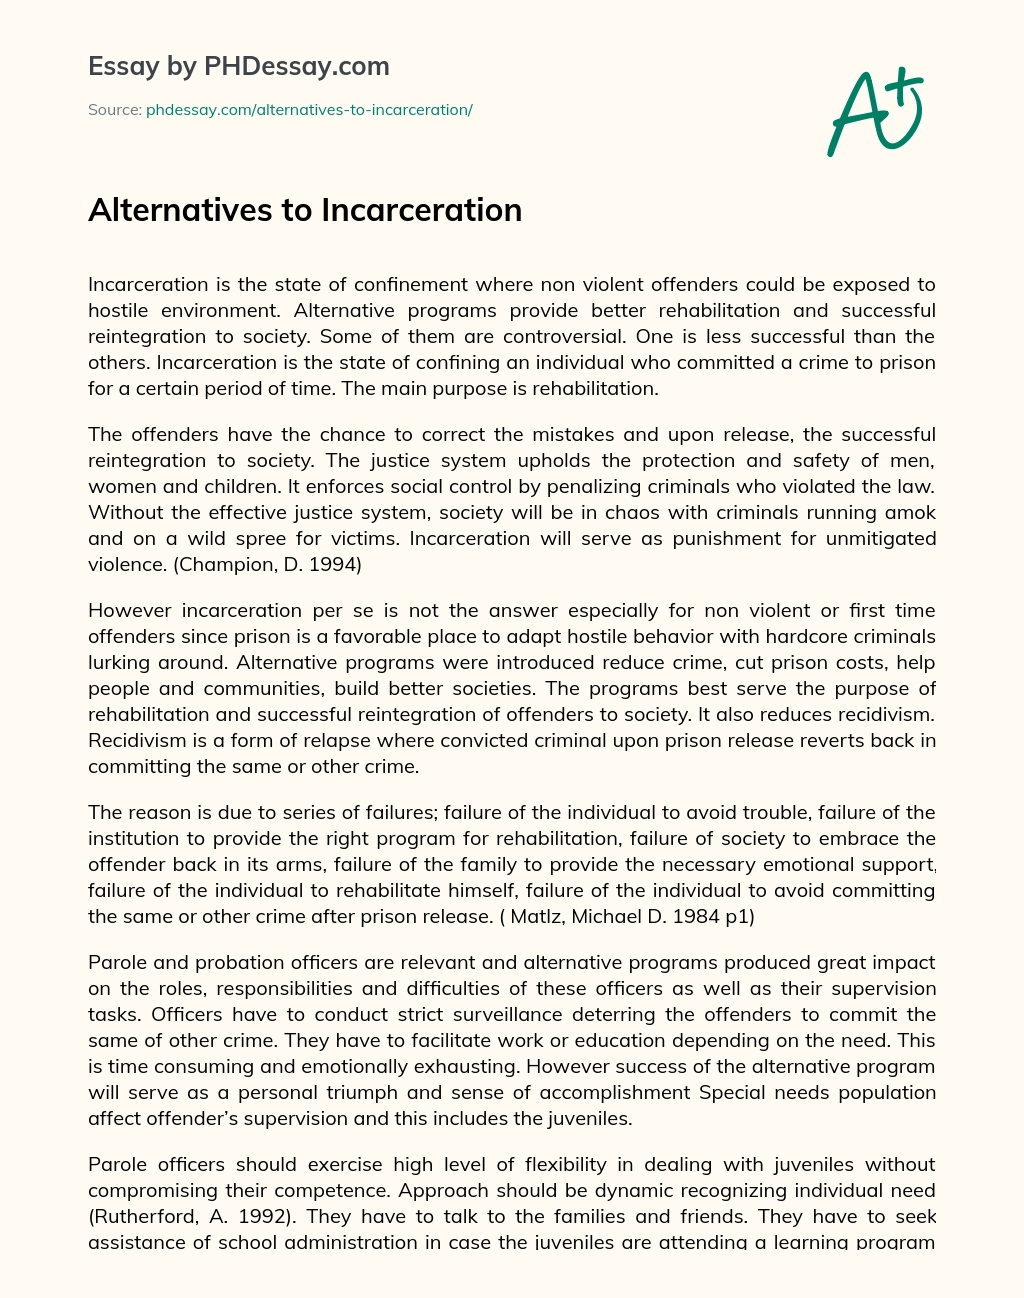 Alternatives to Incarceration essay